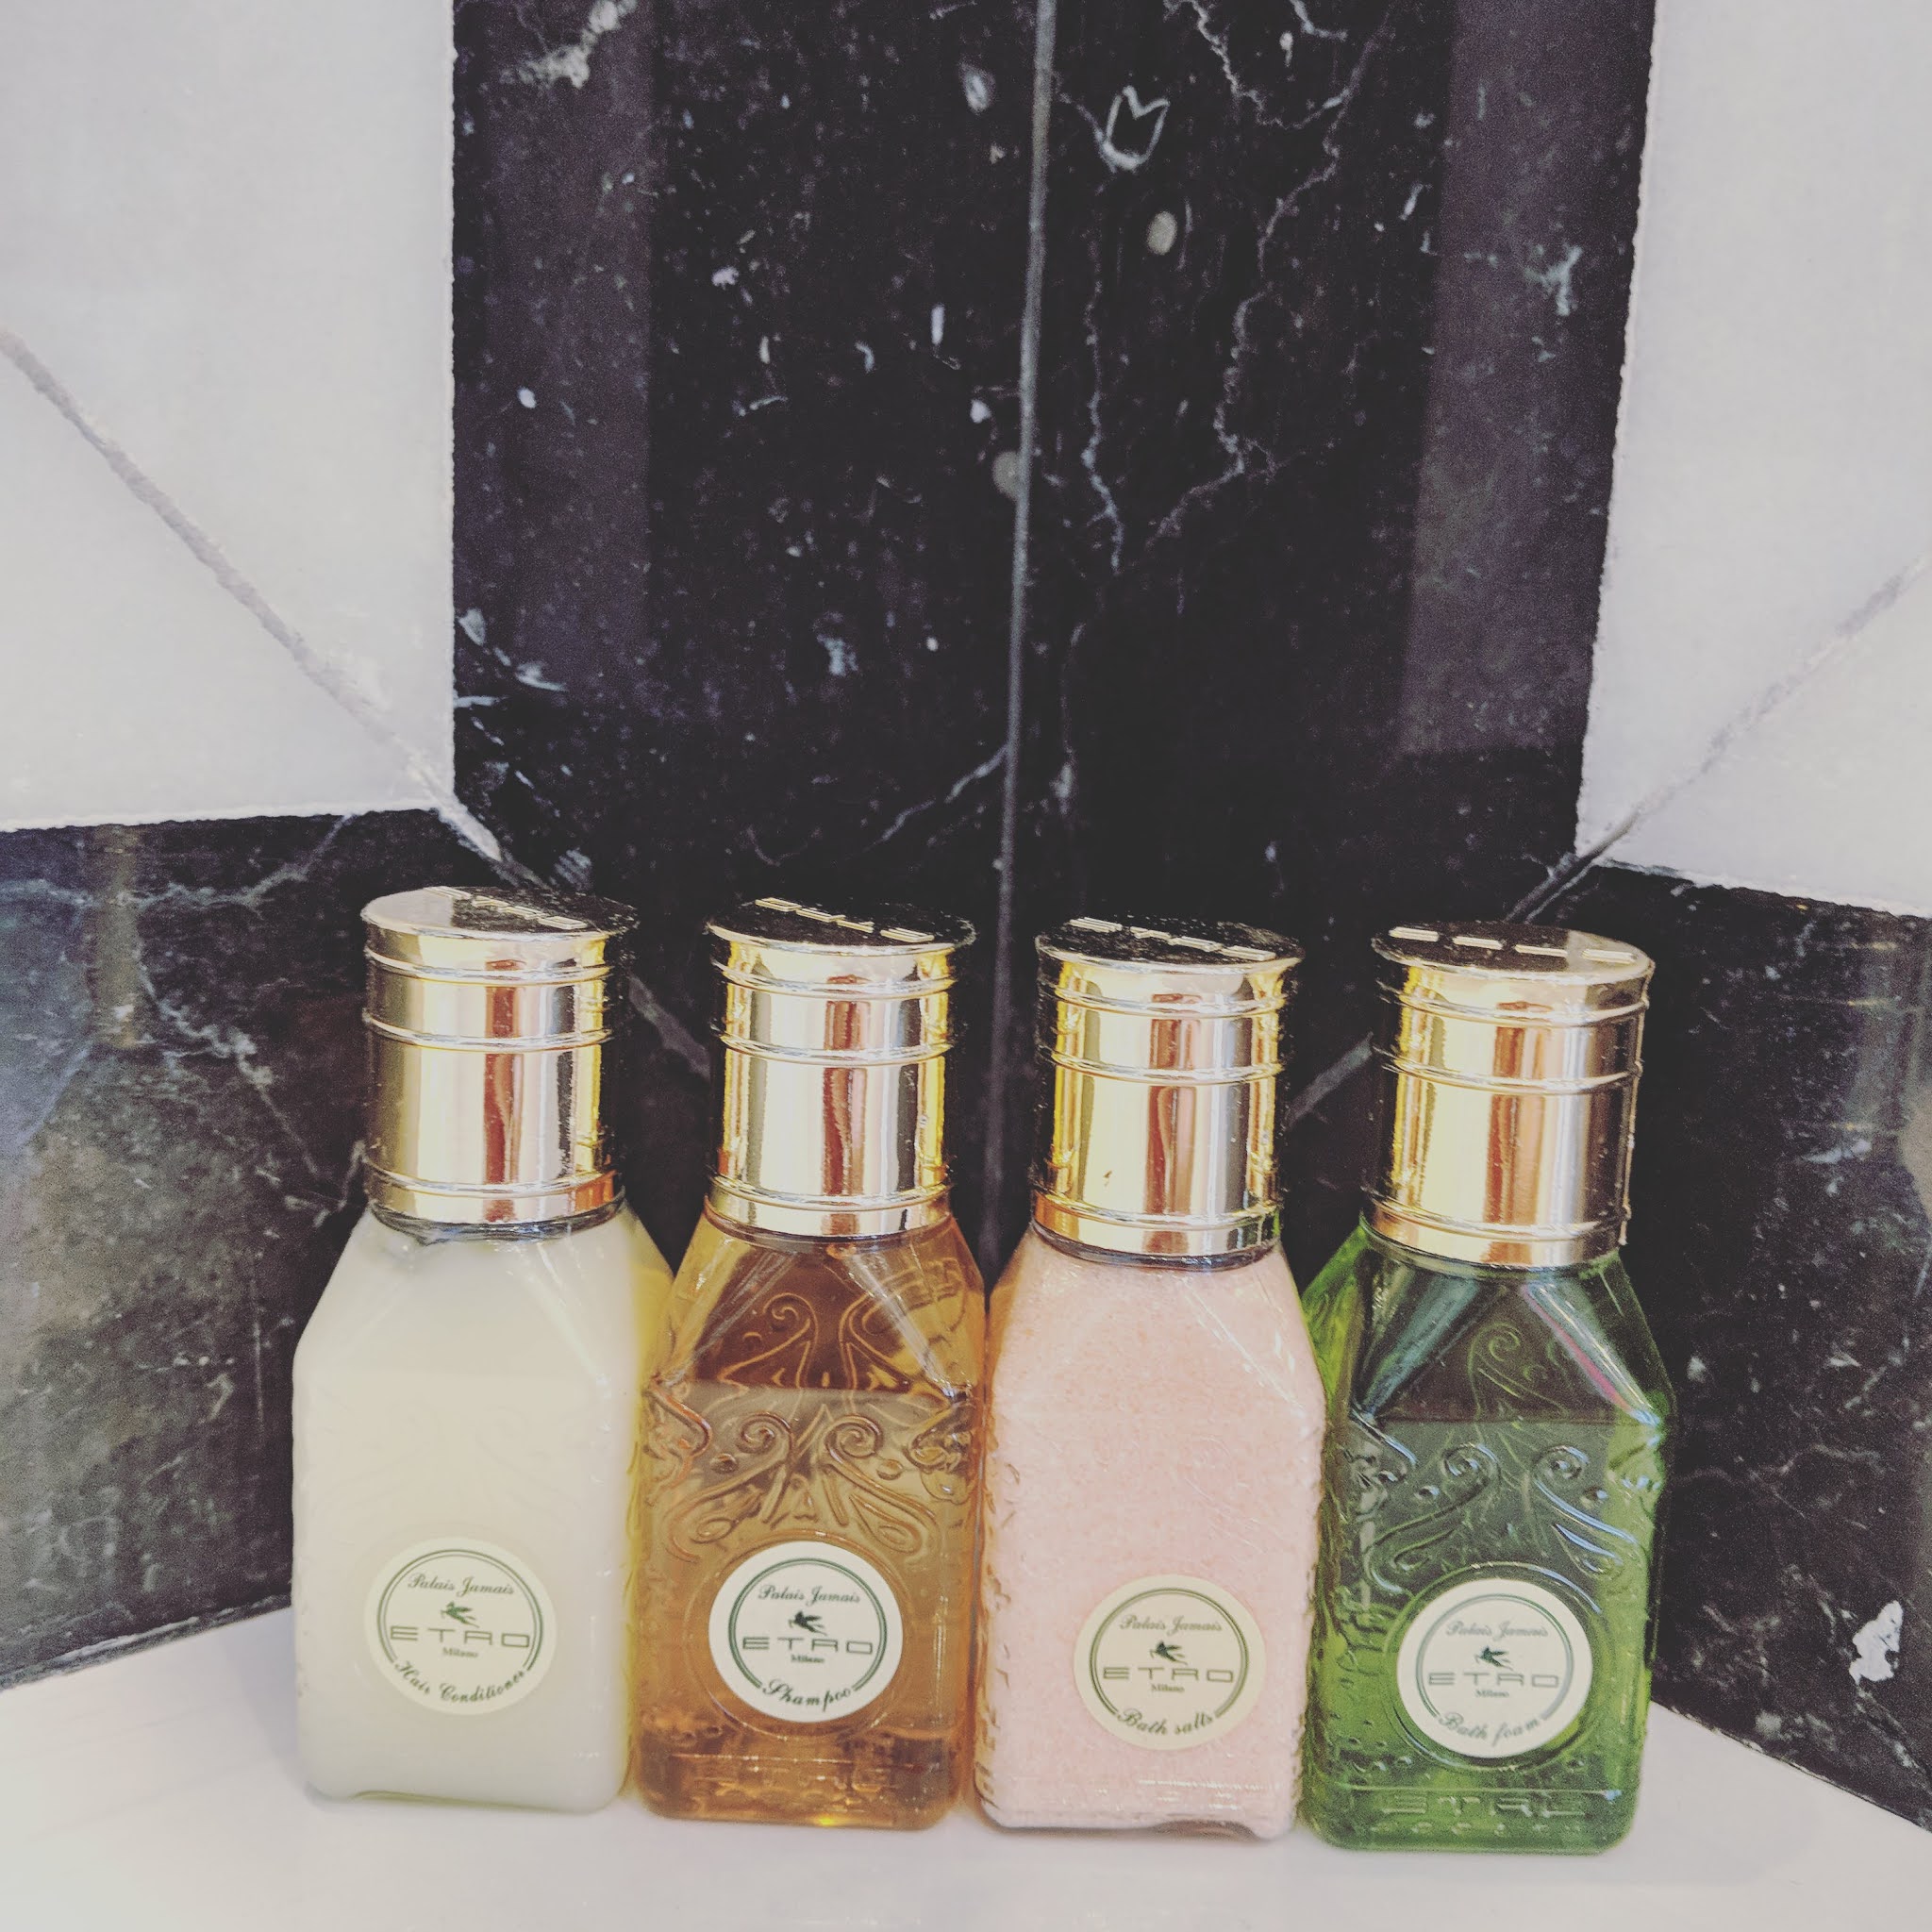 metro mini bath products in mini pastel bottles at heritage madrid hotel